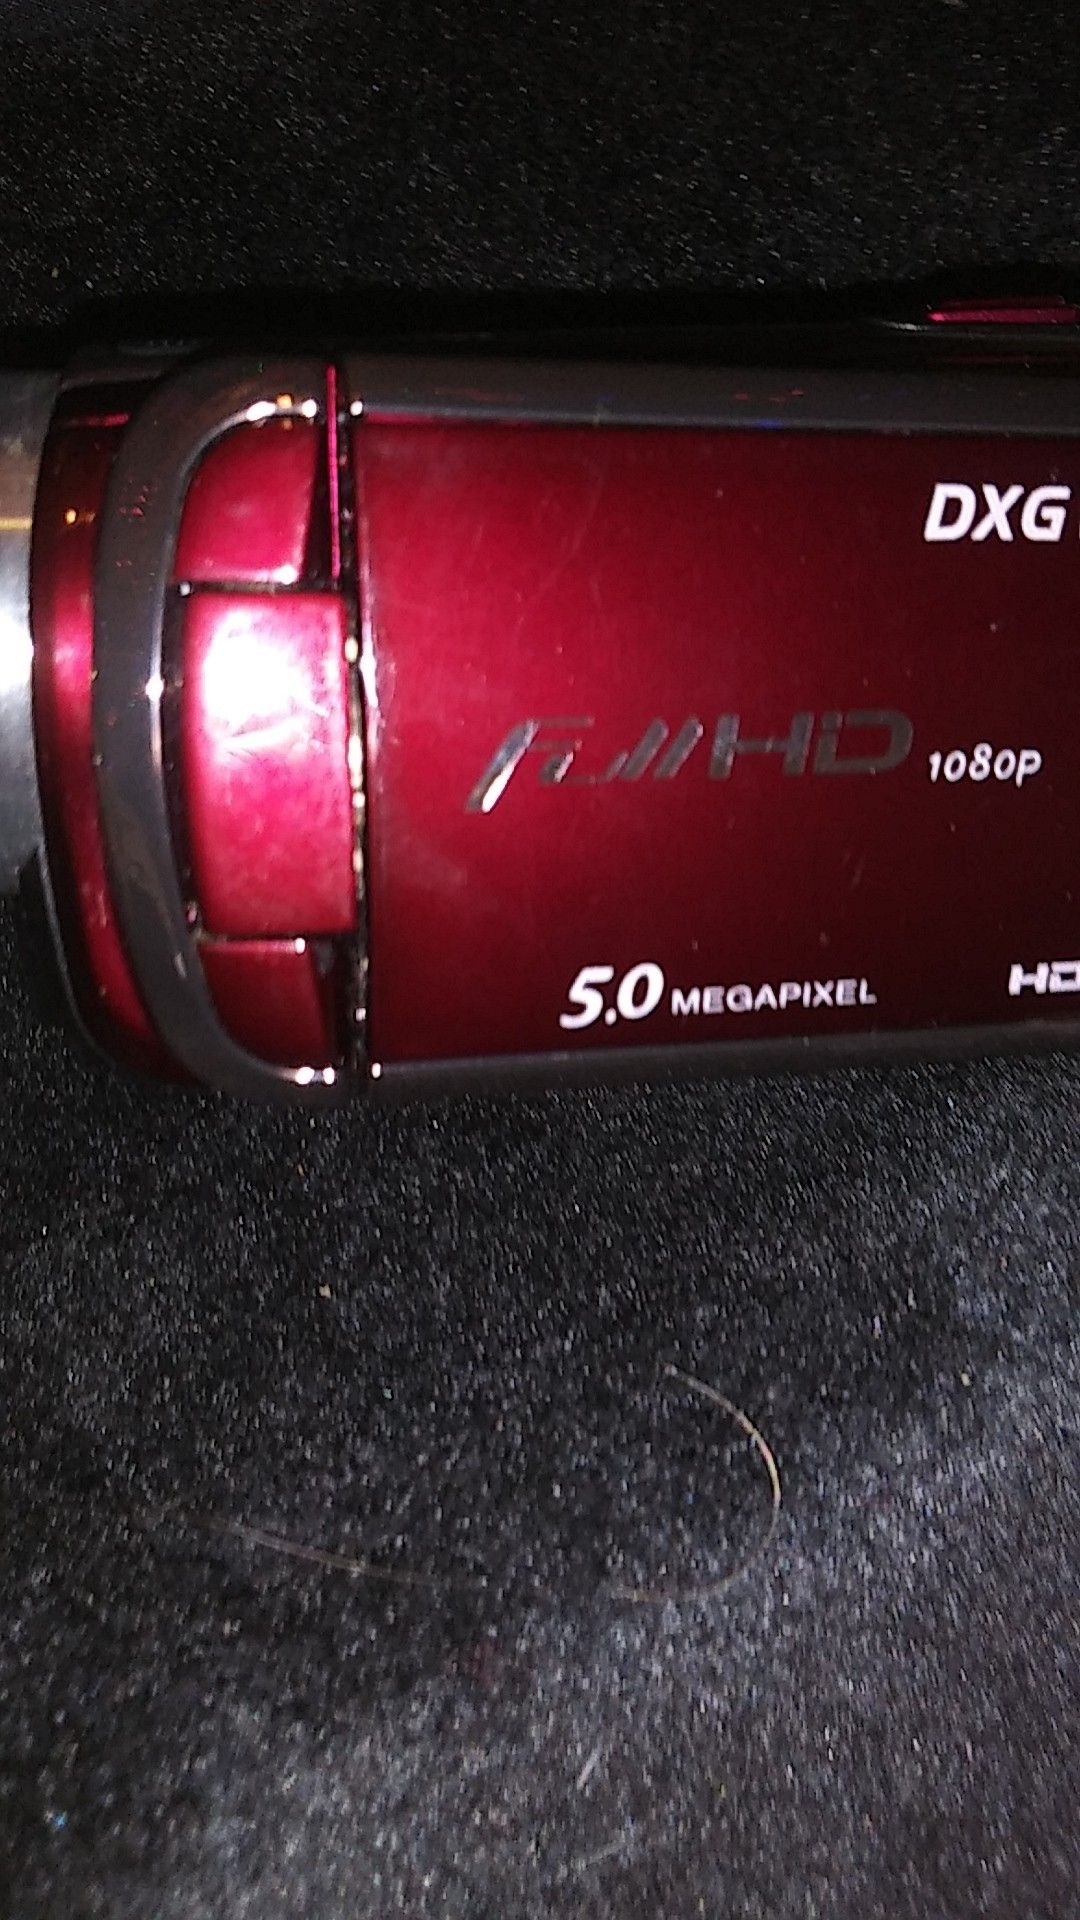 Dxg pro gear camera